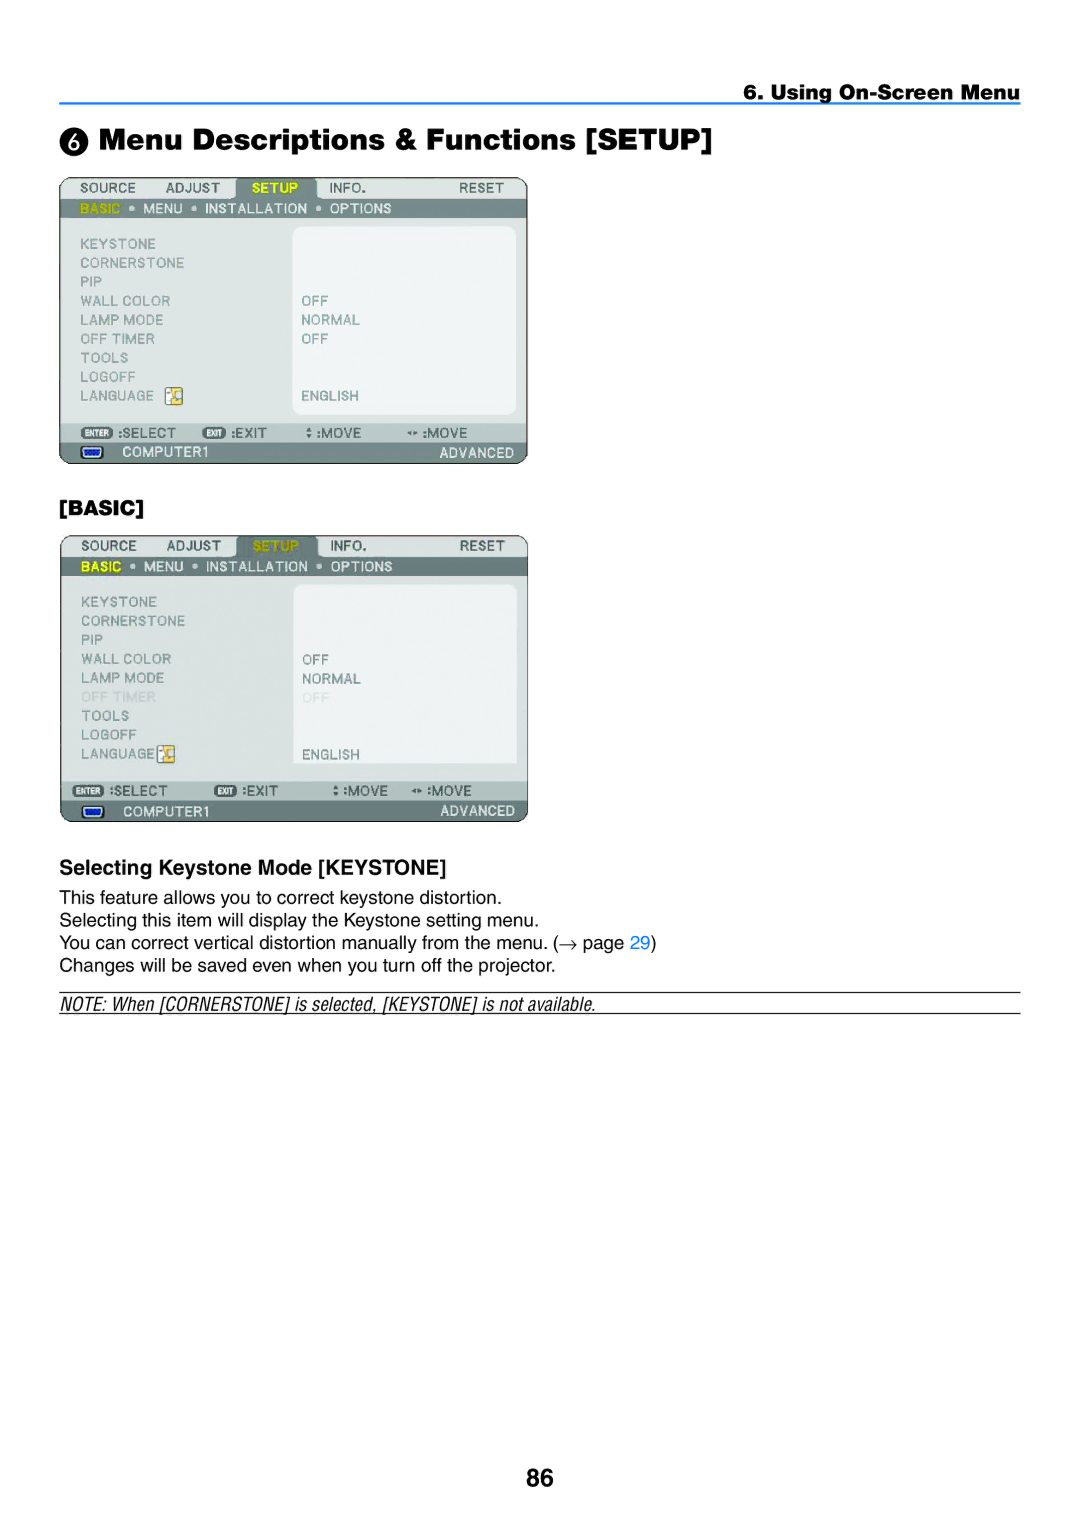 NEC NP1150, NP2150 user manual  Menu Descriptions & Functions Setup, Basic Selecting Keystone Mode Keystone 